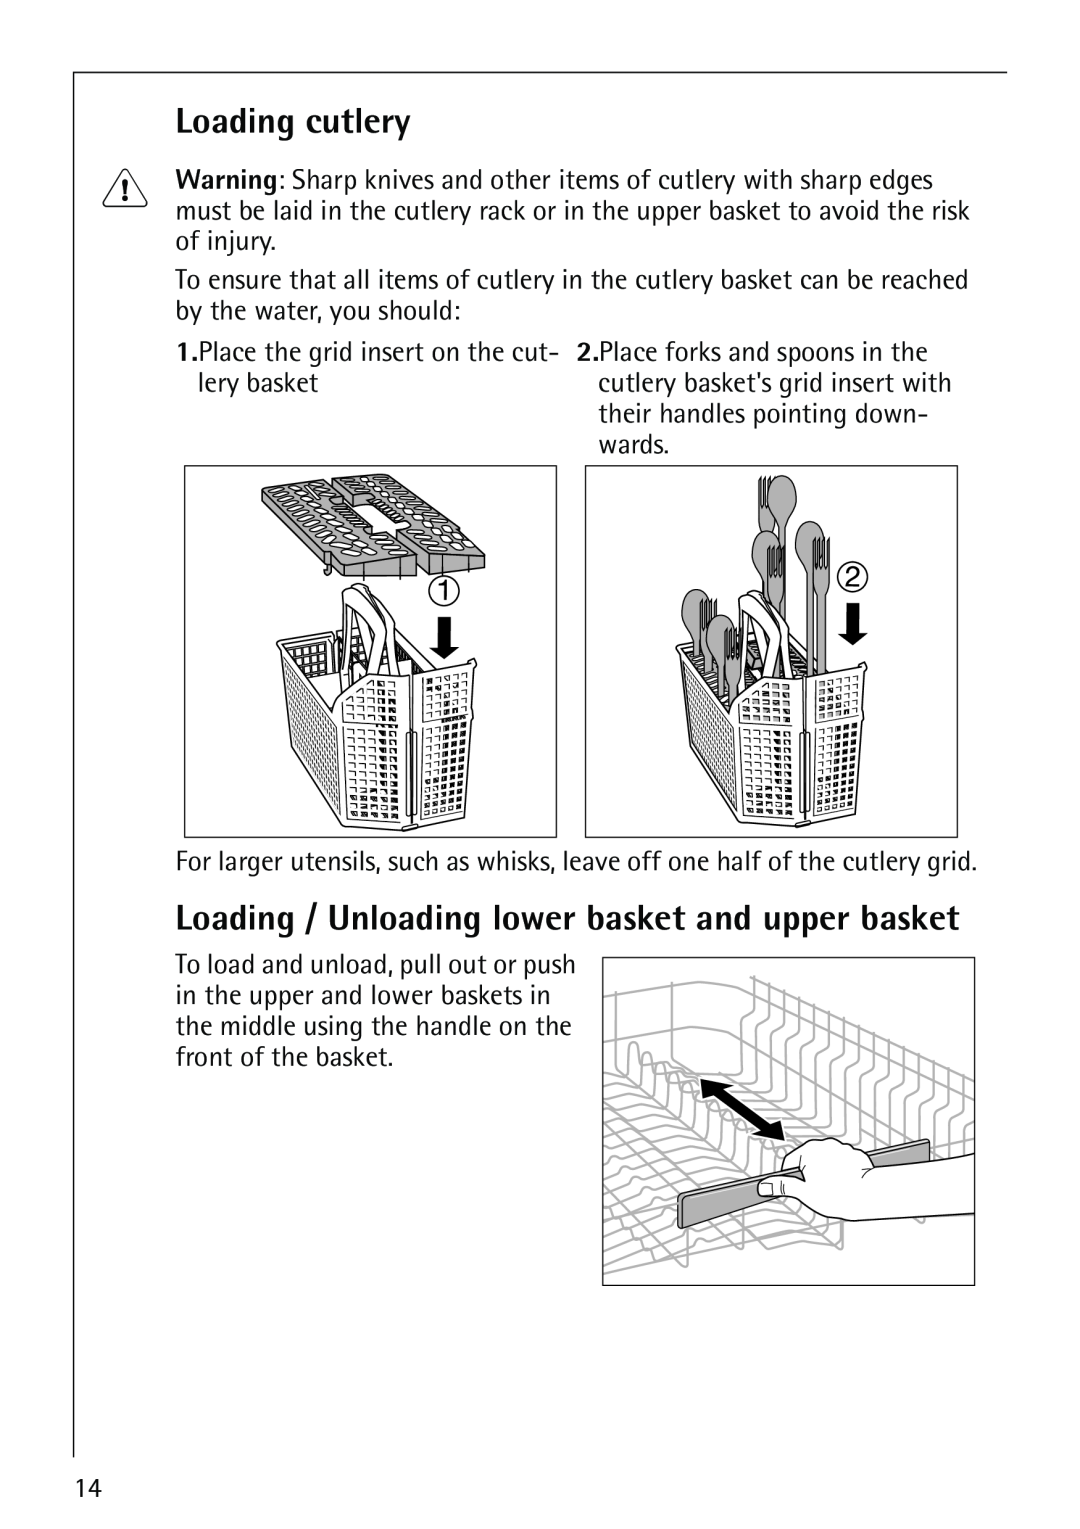 AEG 40860 manual Loading cutlery, Loading / Unloading lower basket and upper basket 